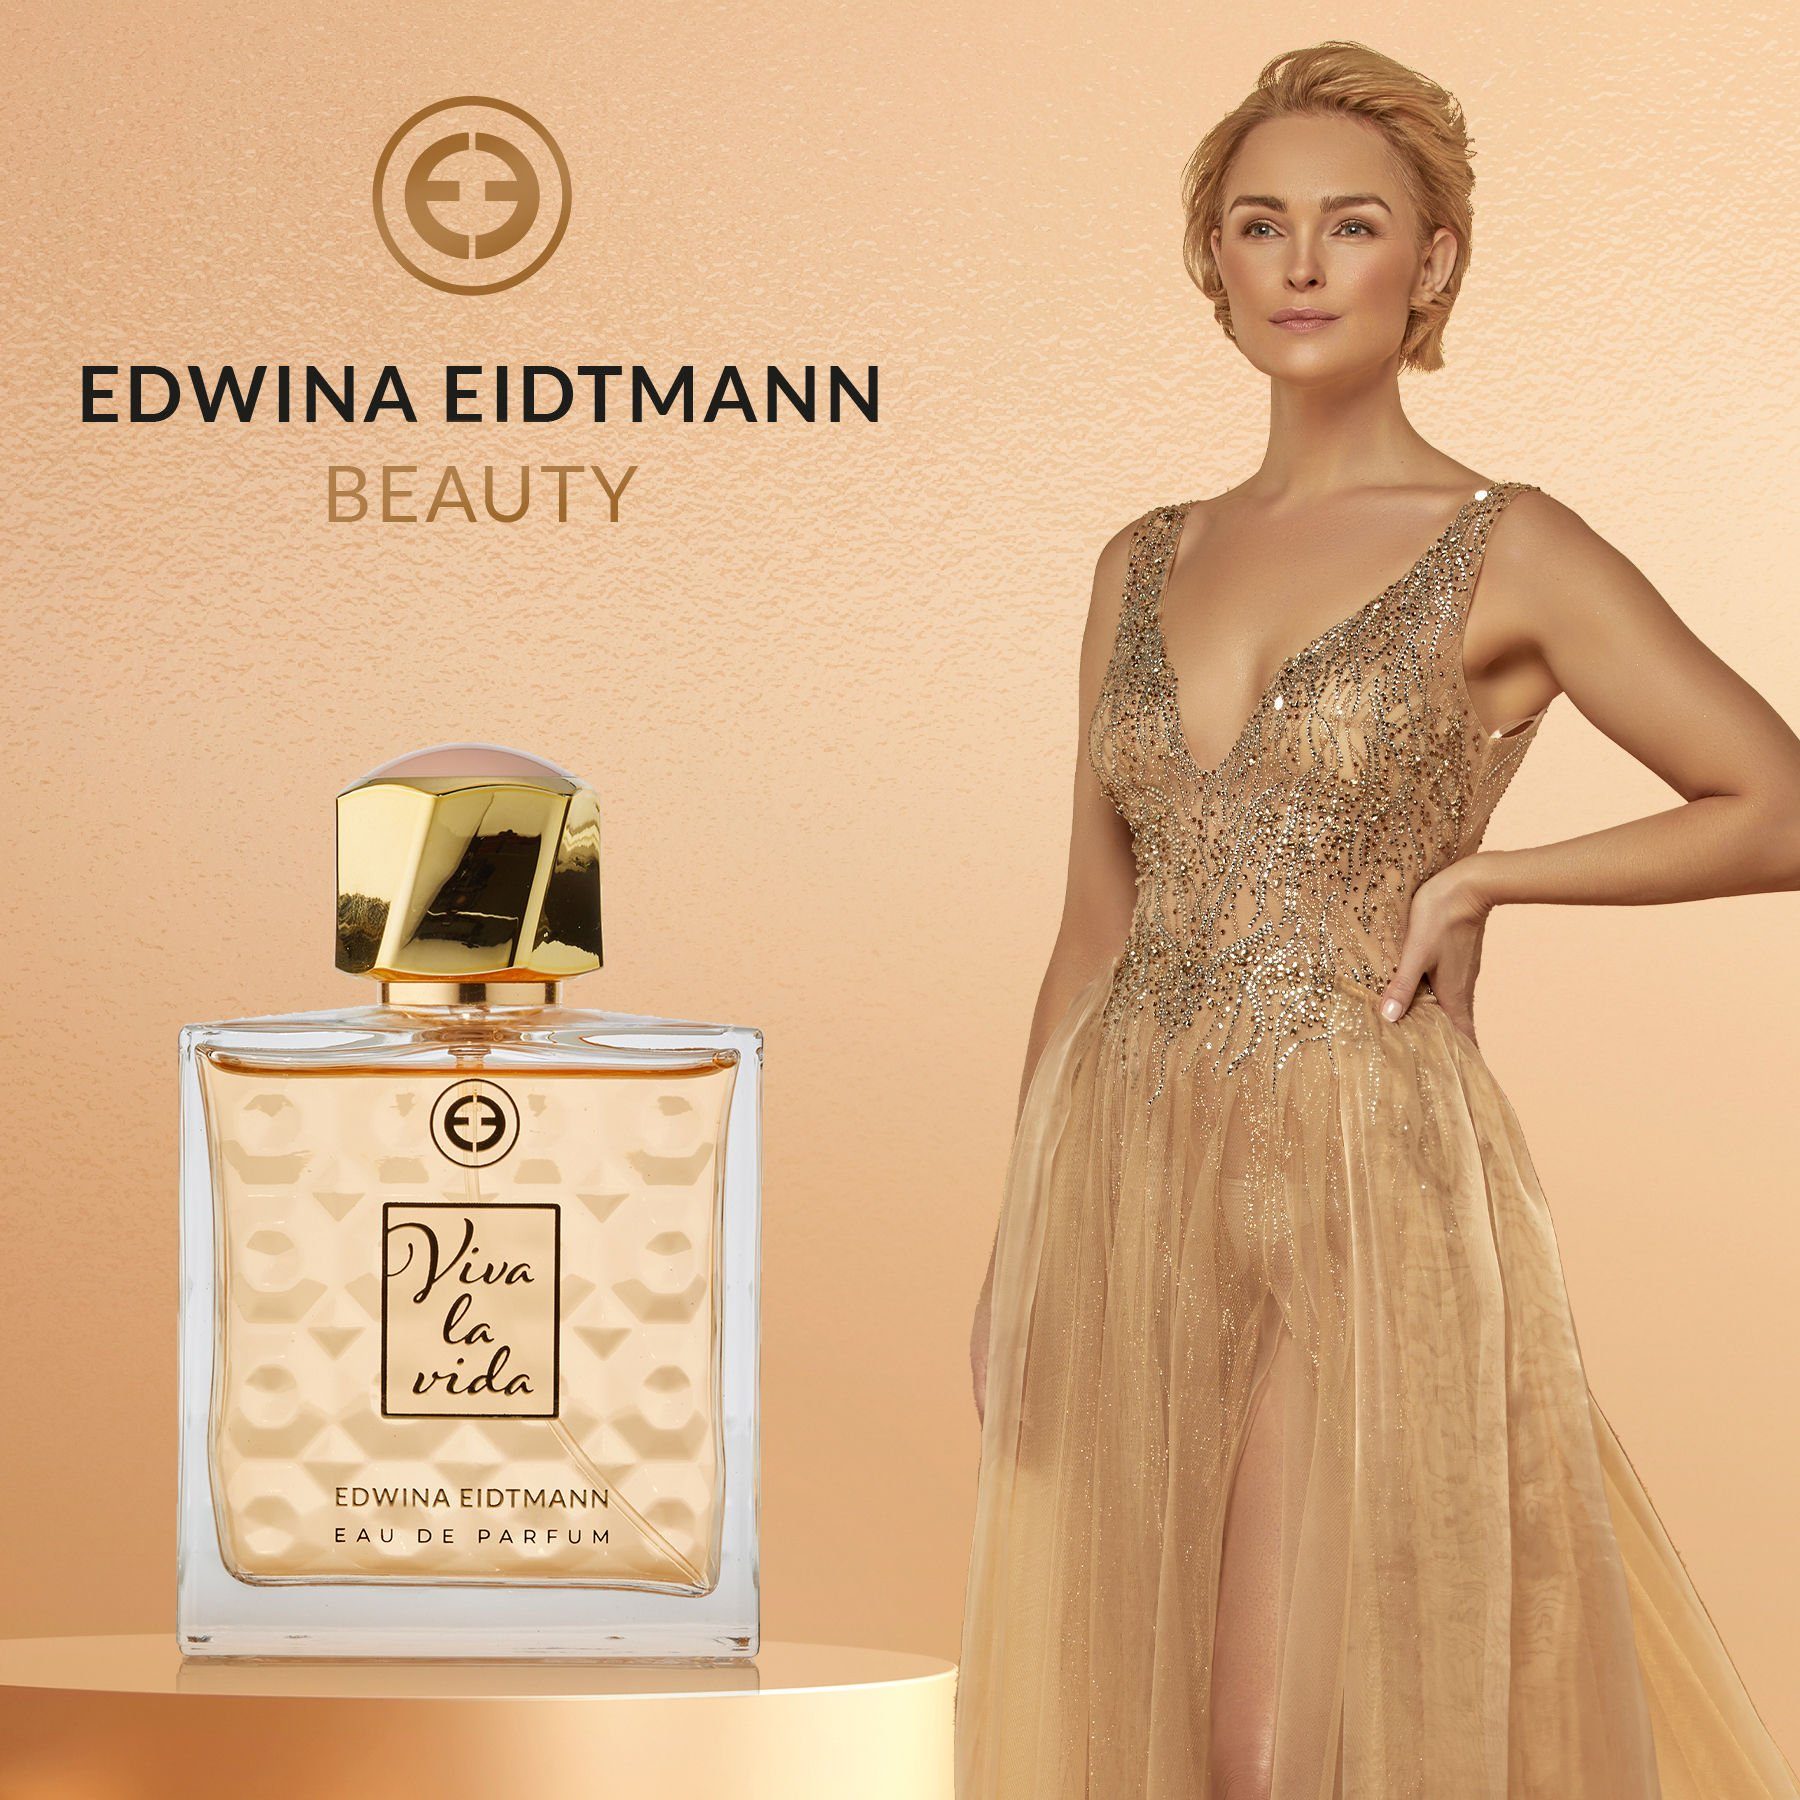 % 18 Eau Parfum Edwina "Viva la Vida", mit de Parfumölanteil Eidtmann